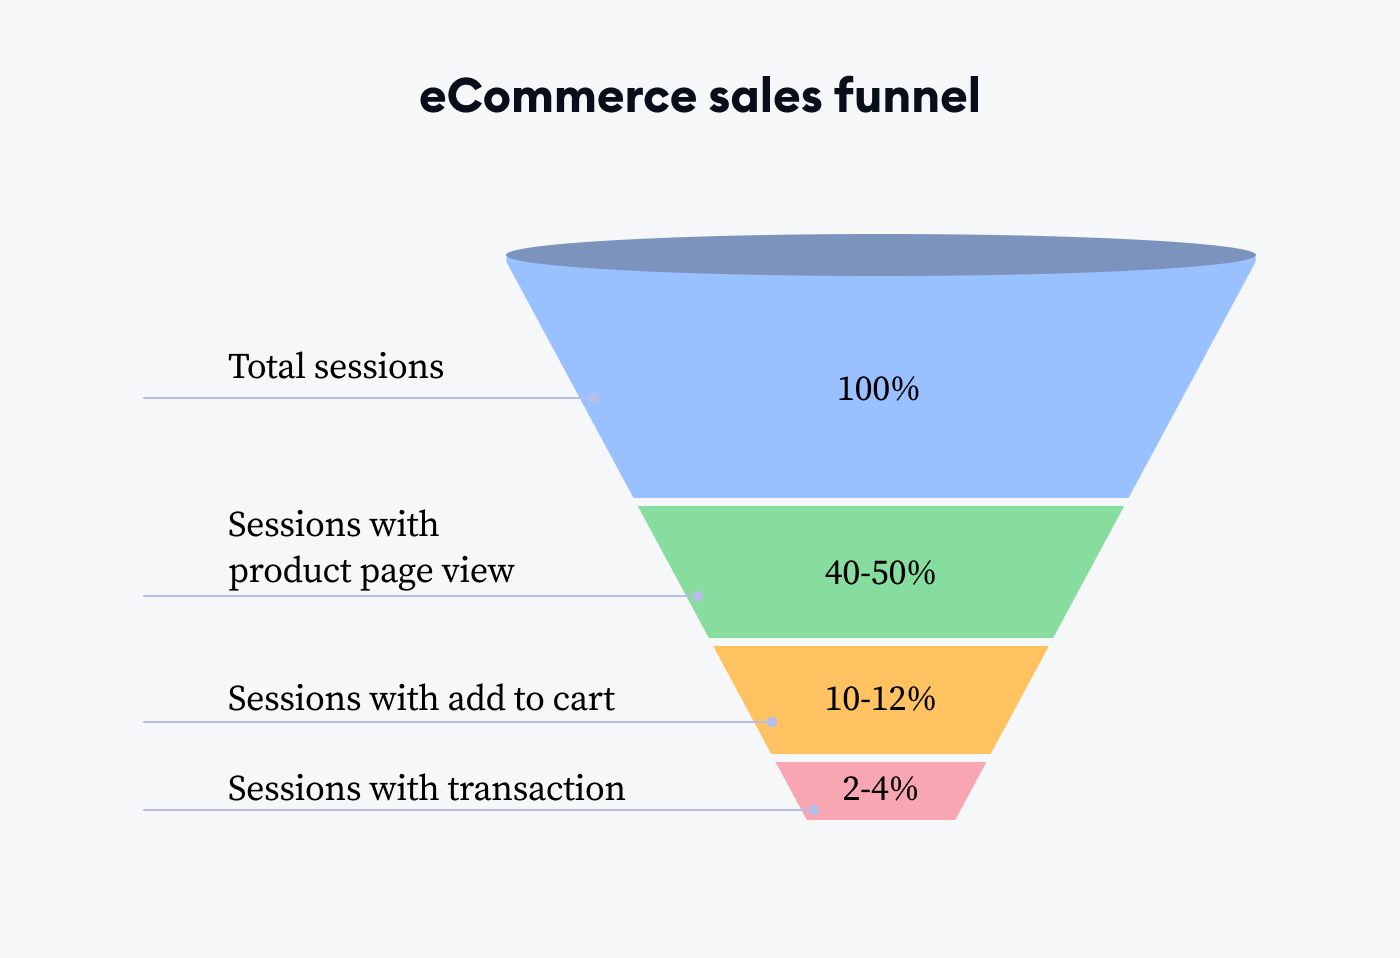 ecommerce sales funnels on image